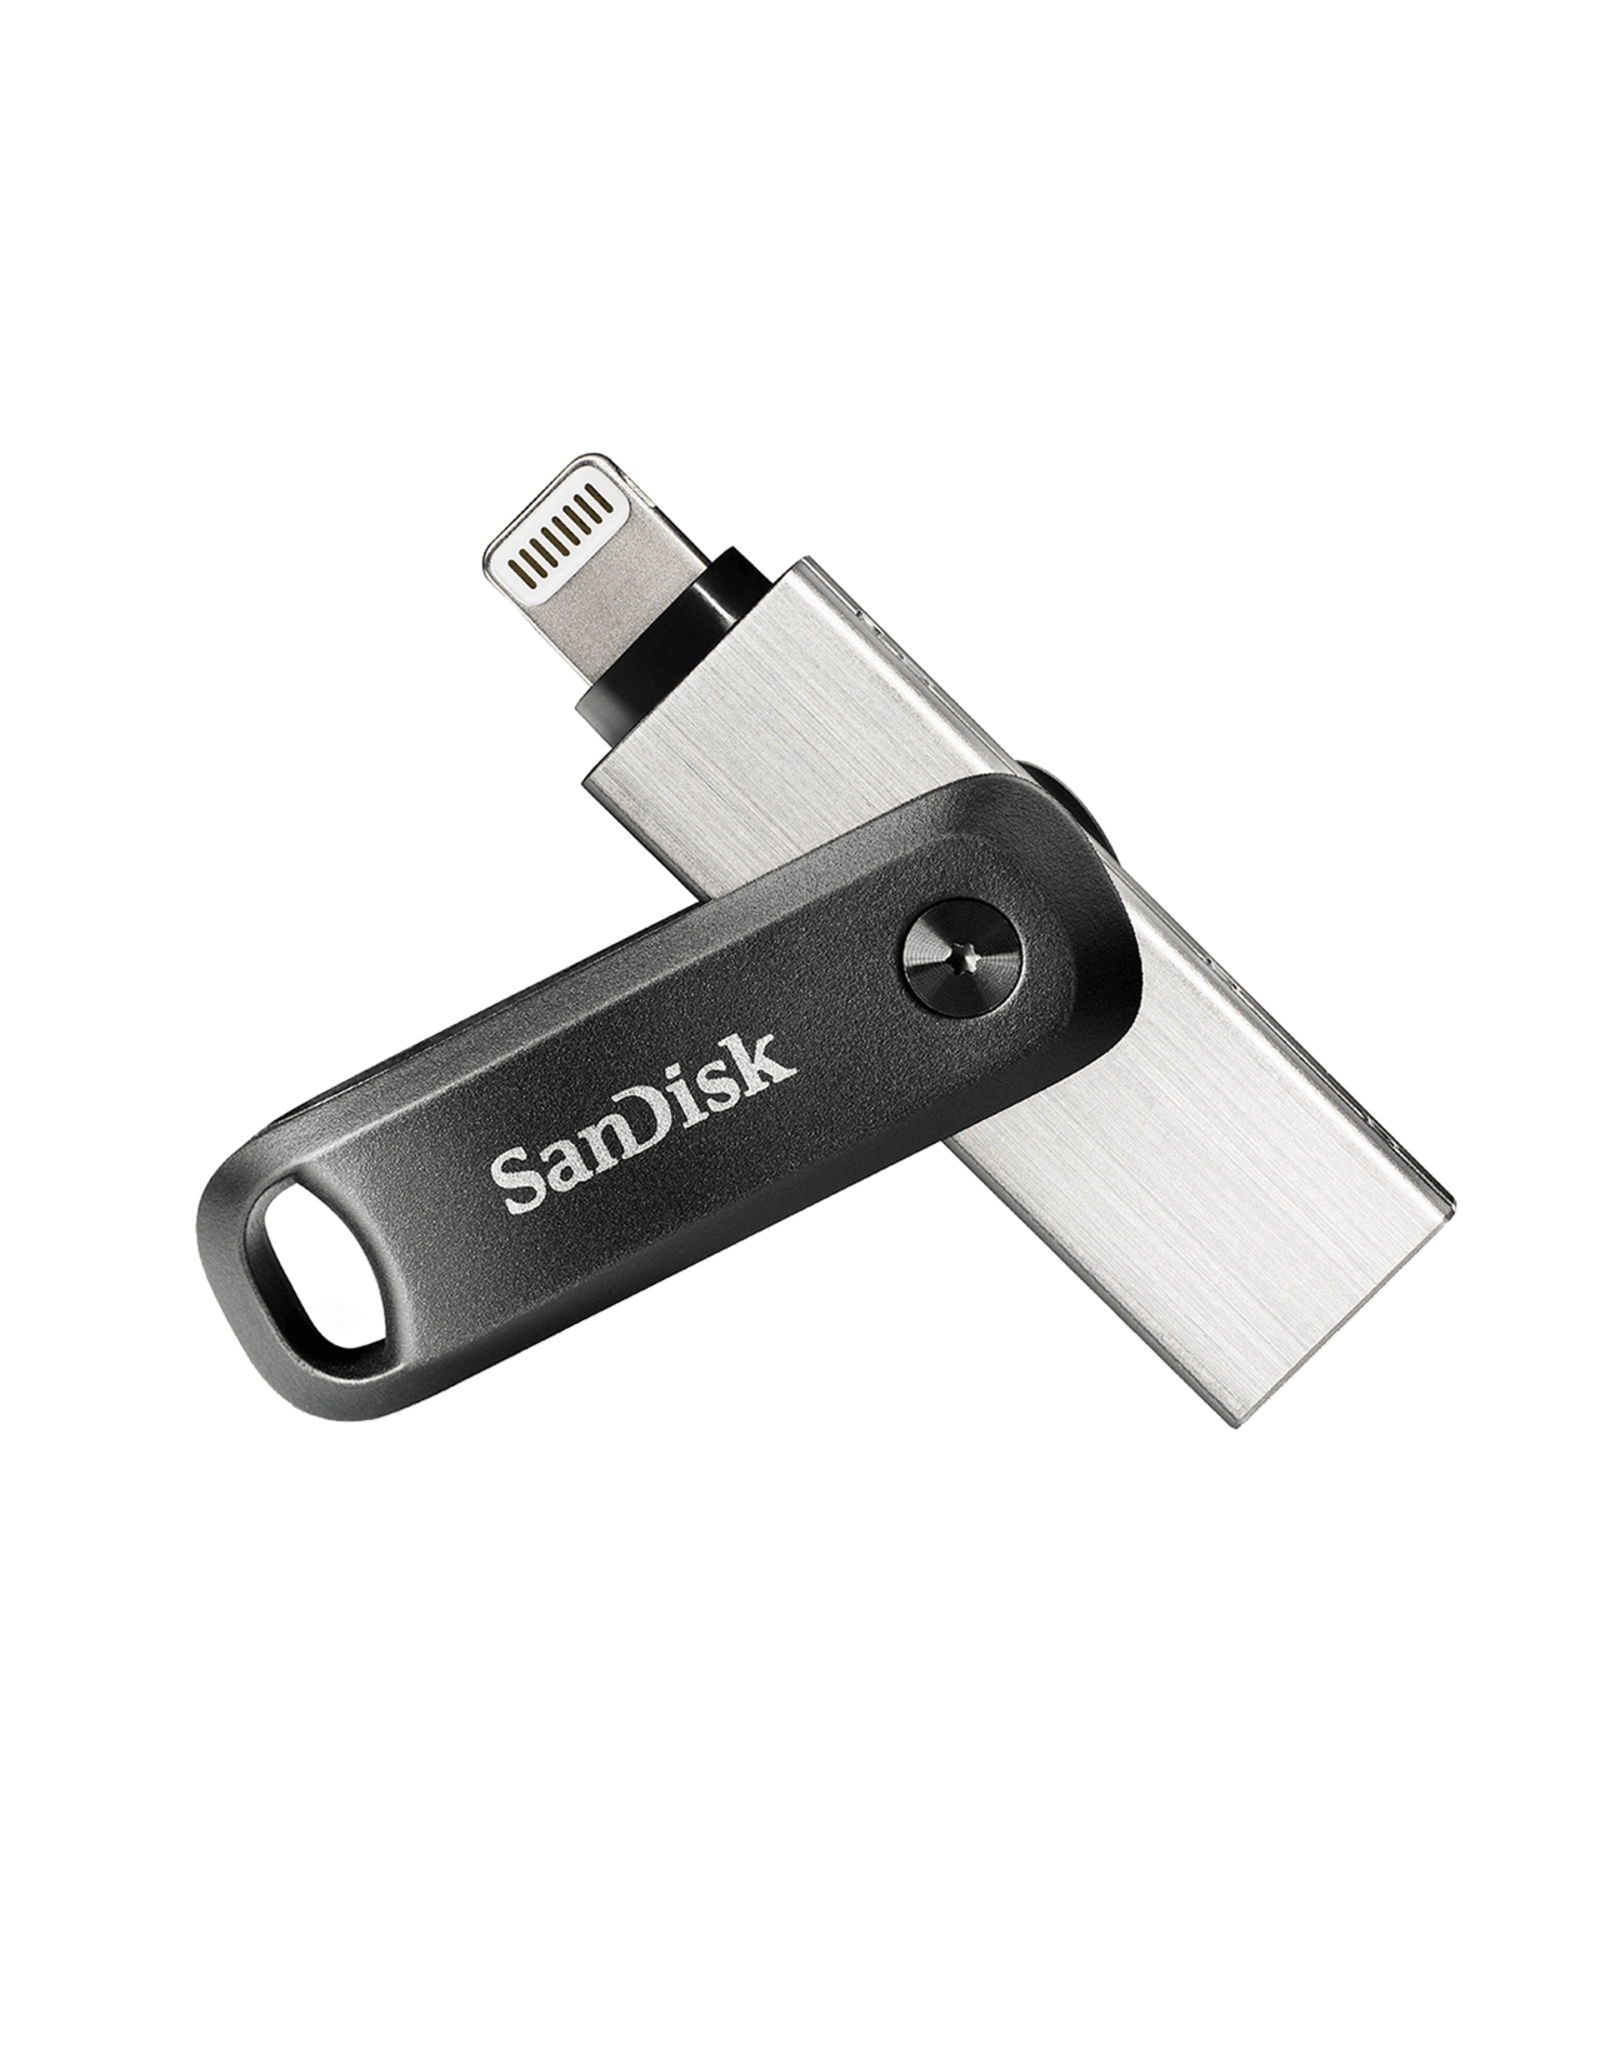 Sandisk iXpand Flash Drive Go 256GB